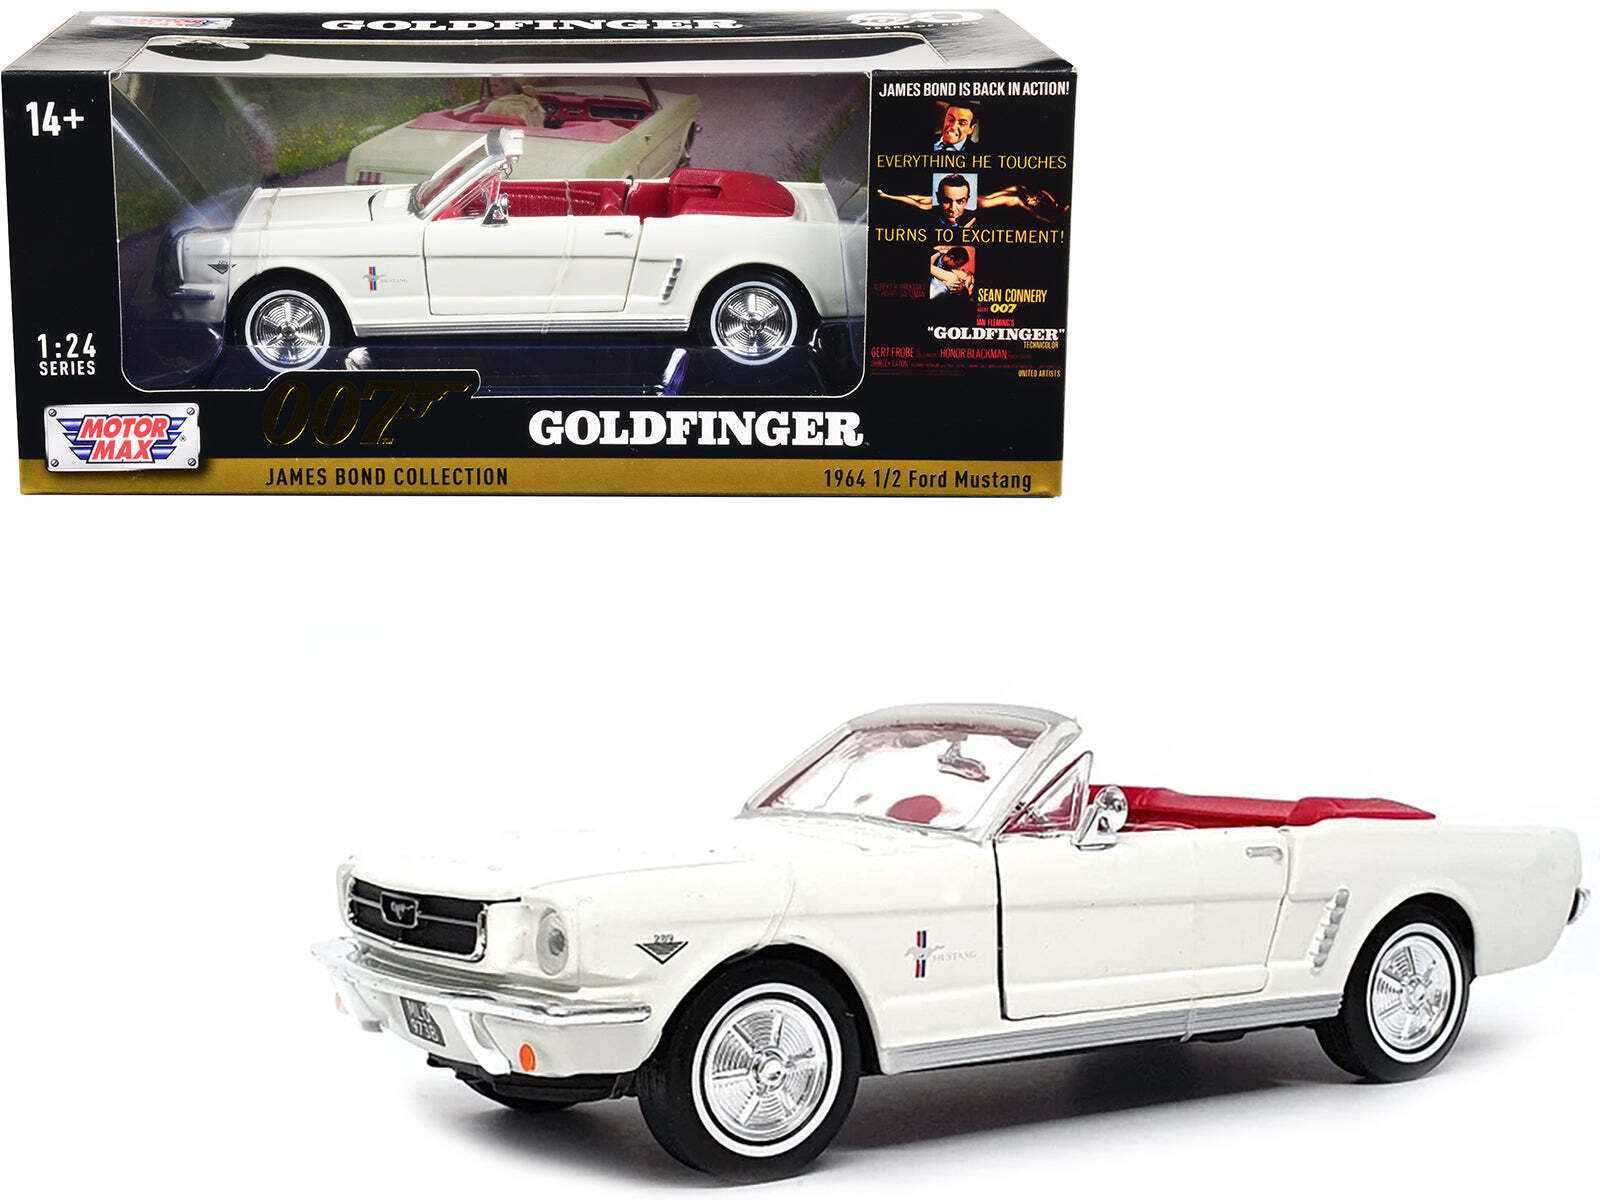 1964 1/2 Ford Mustang James Bond 007 Goldfinger 1/24 Diecast Model Car